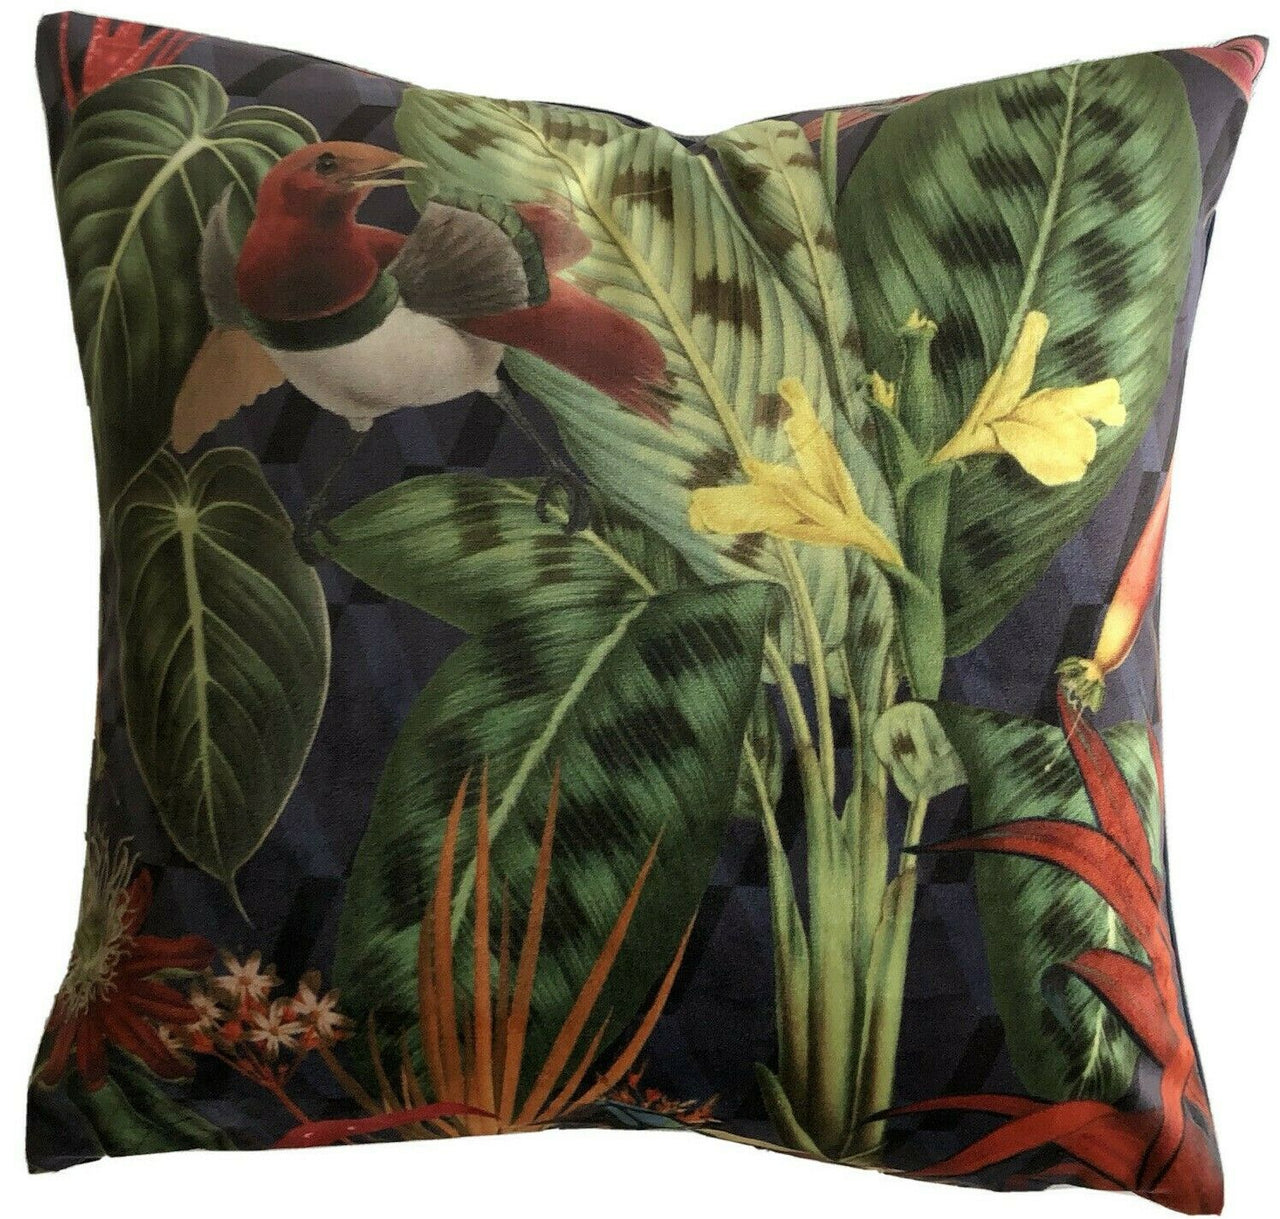 Deep Jungle Velvet Cushion Cover Birds Throw Pillow Case Plants Leaves Botanical Sofa Decor Green Orange Floral Pattern